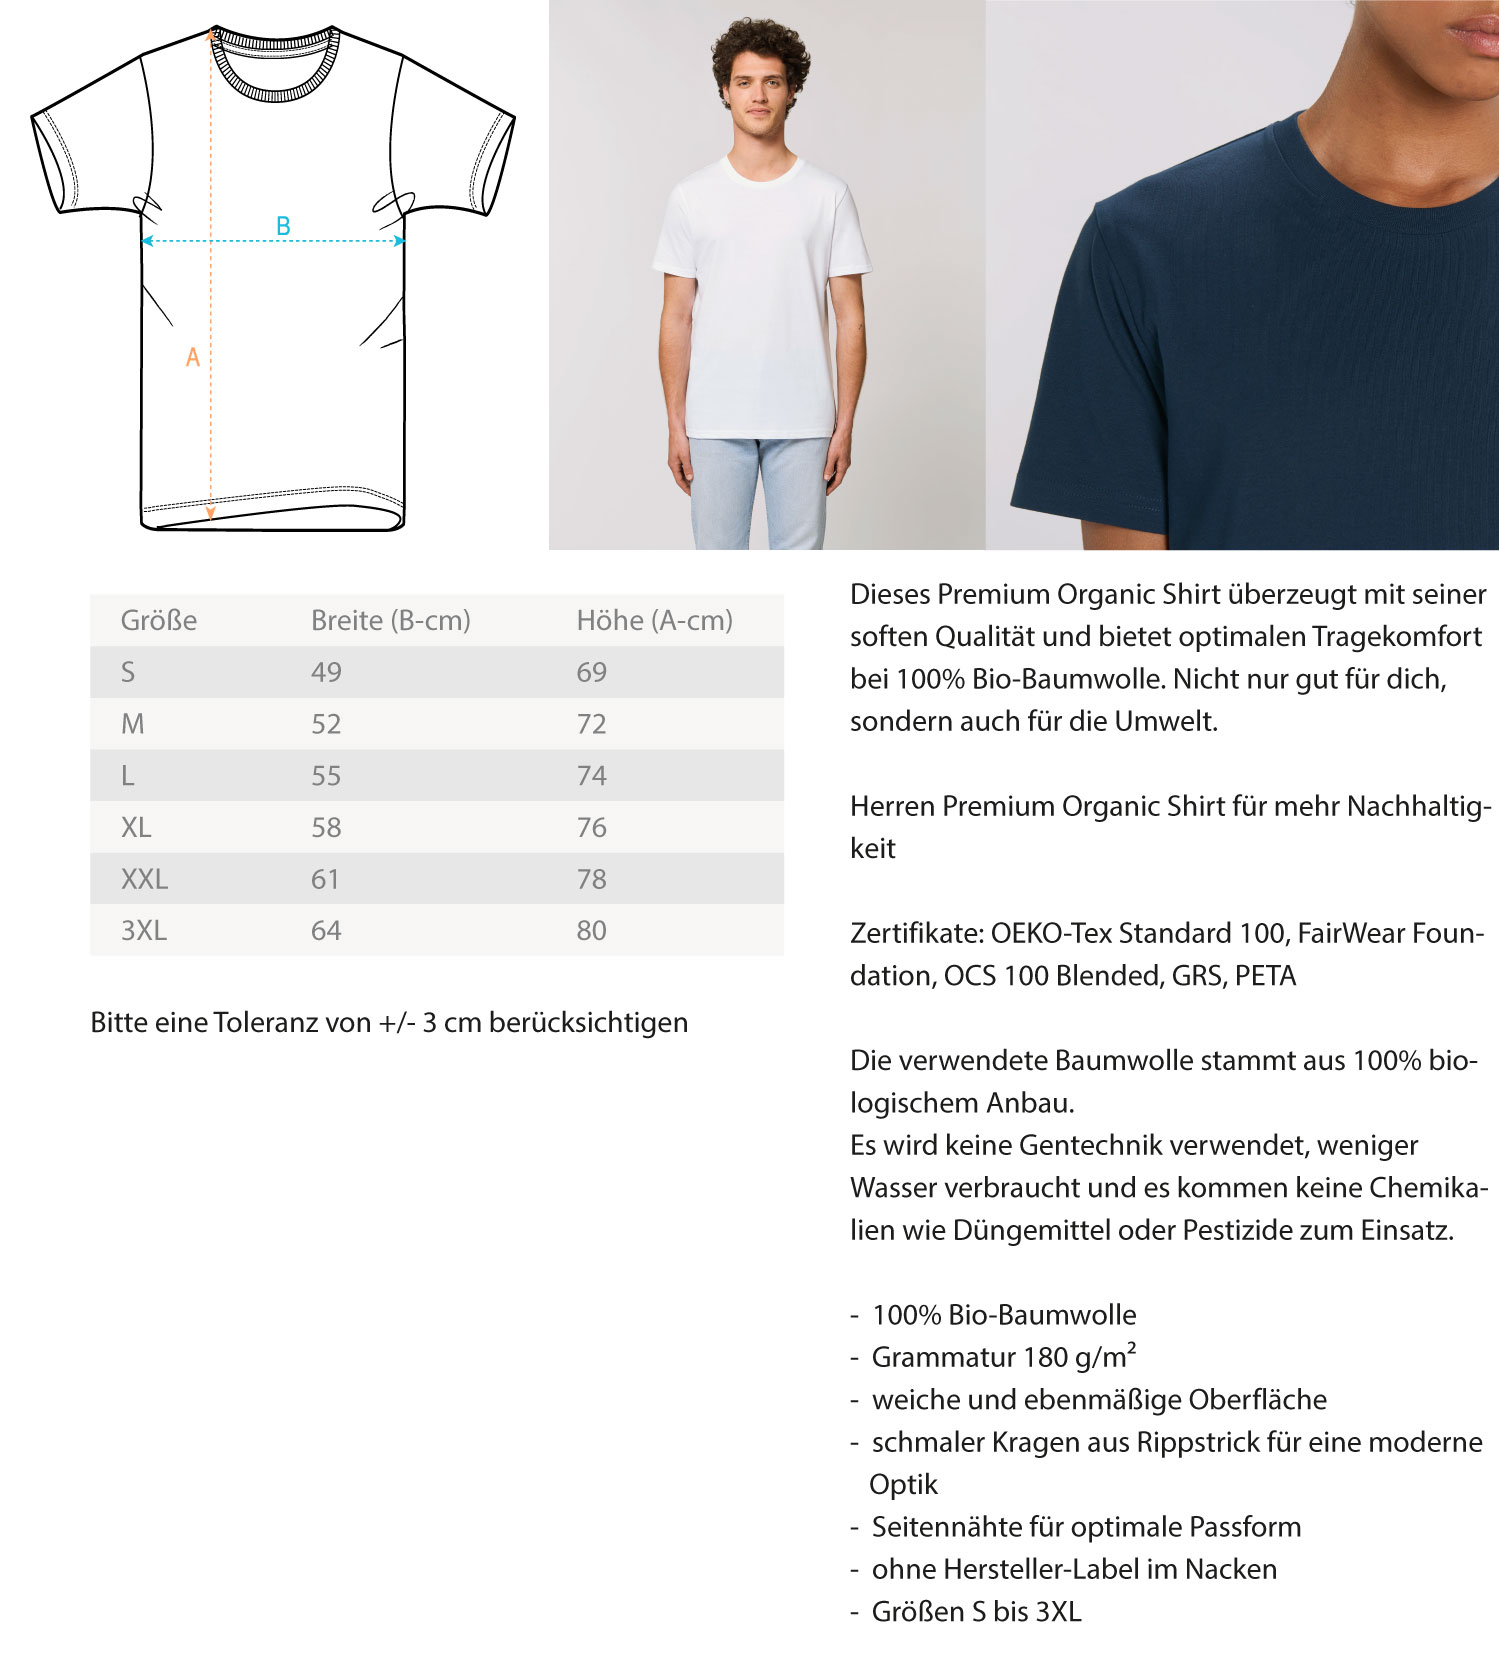 Farn (Herren/Unisex Premium Organic Shirt ST/ST )